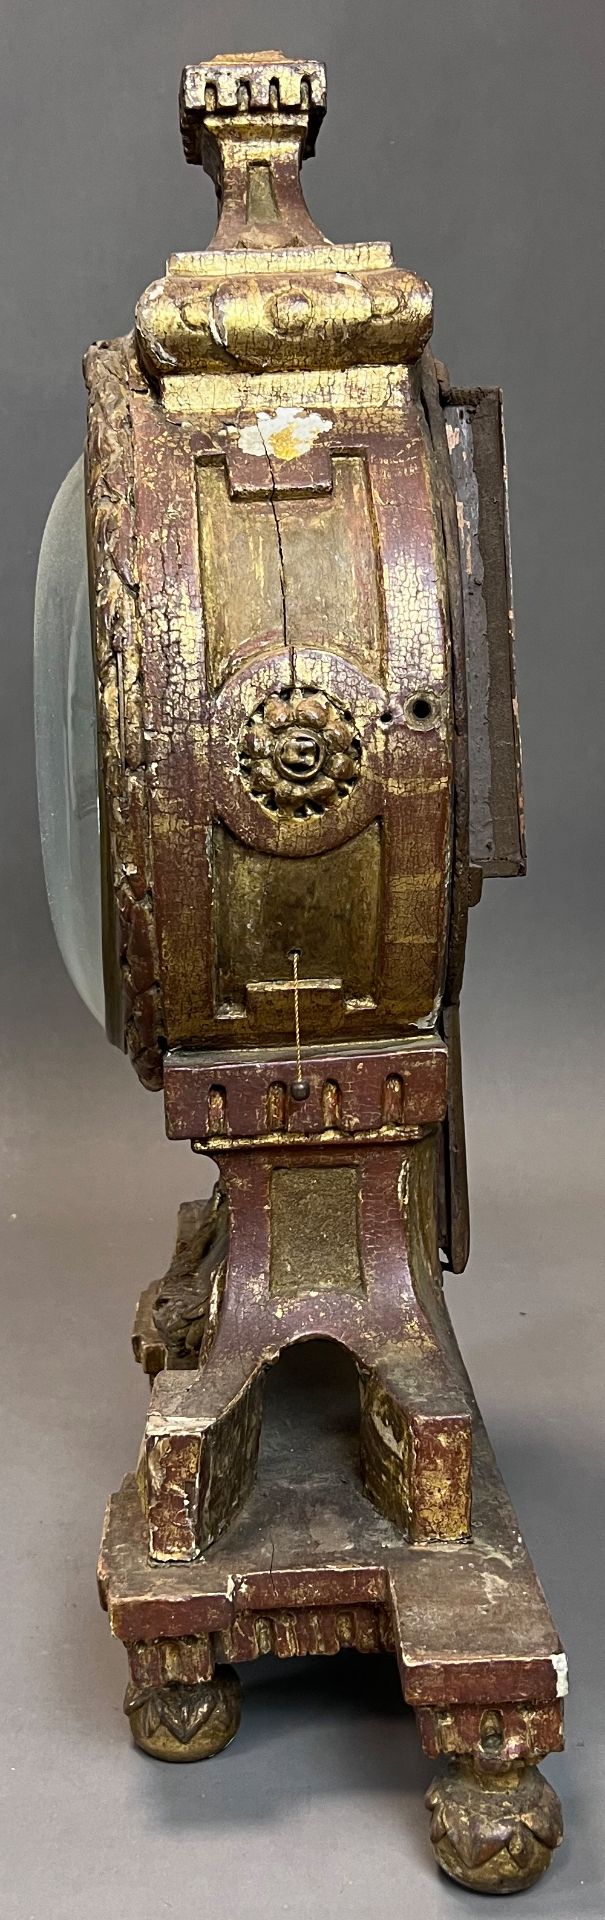 Antique pendulum clock. Wood. Probably Austria. Late 18th century. - Image 2 of 17